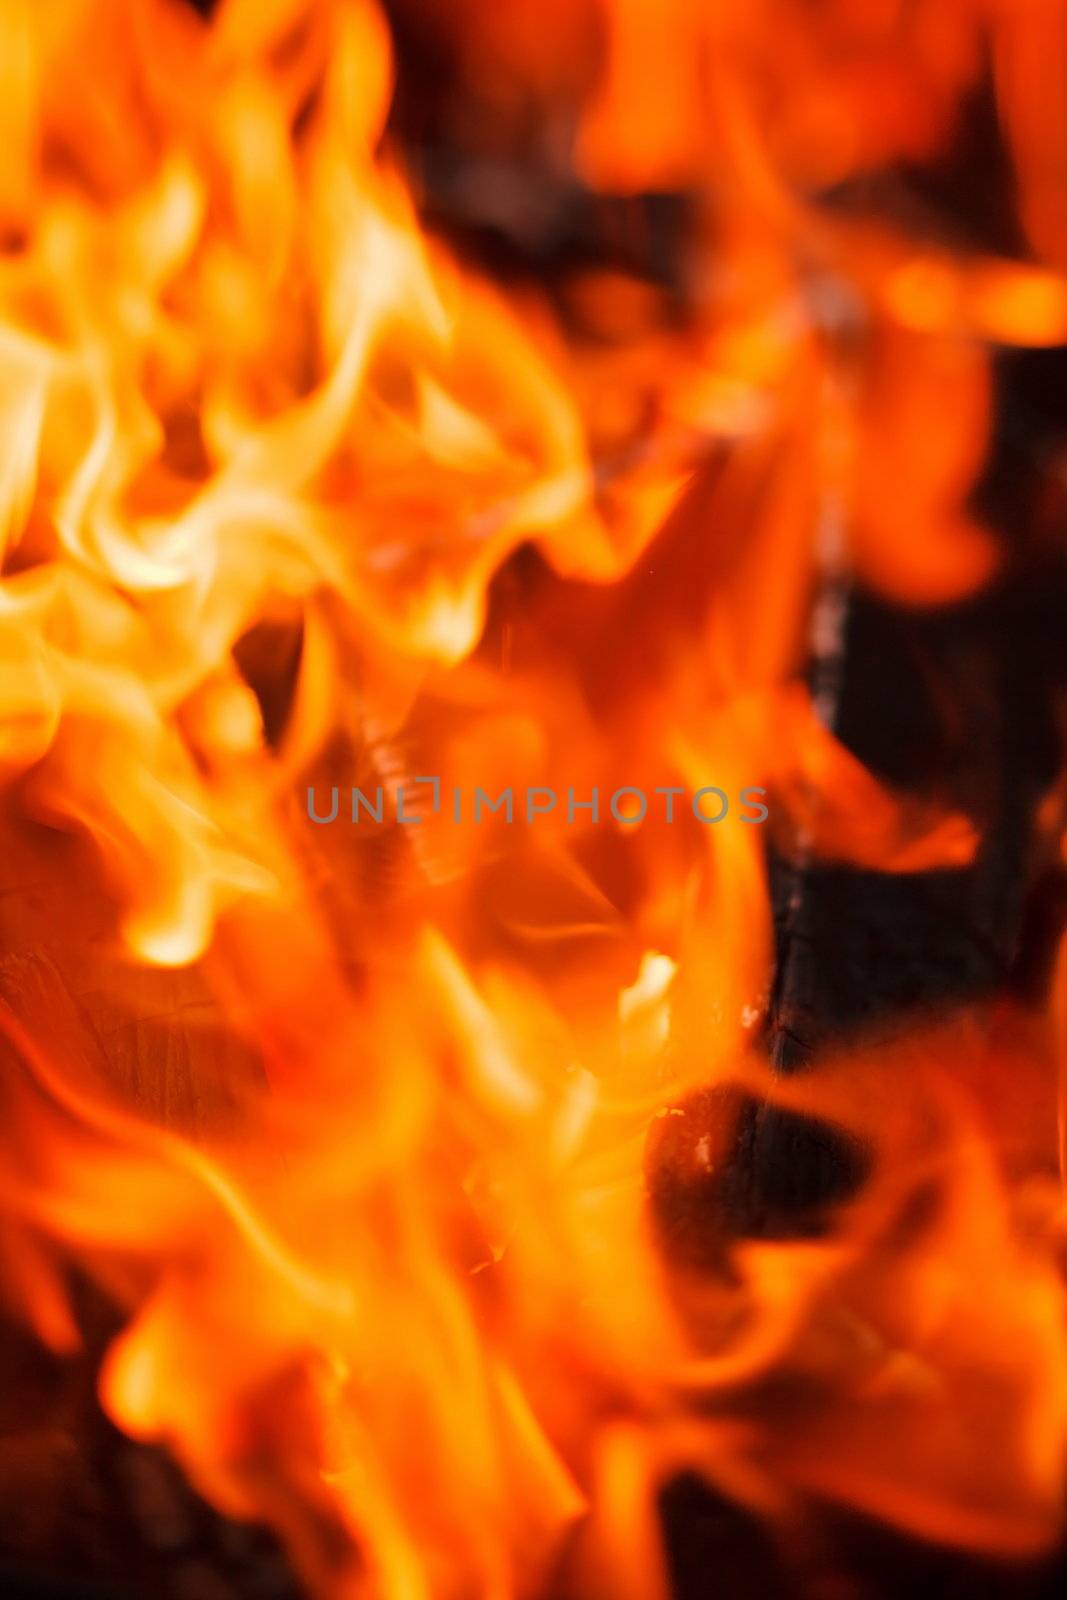 Fire in fireplace  by shebeko